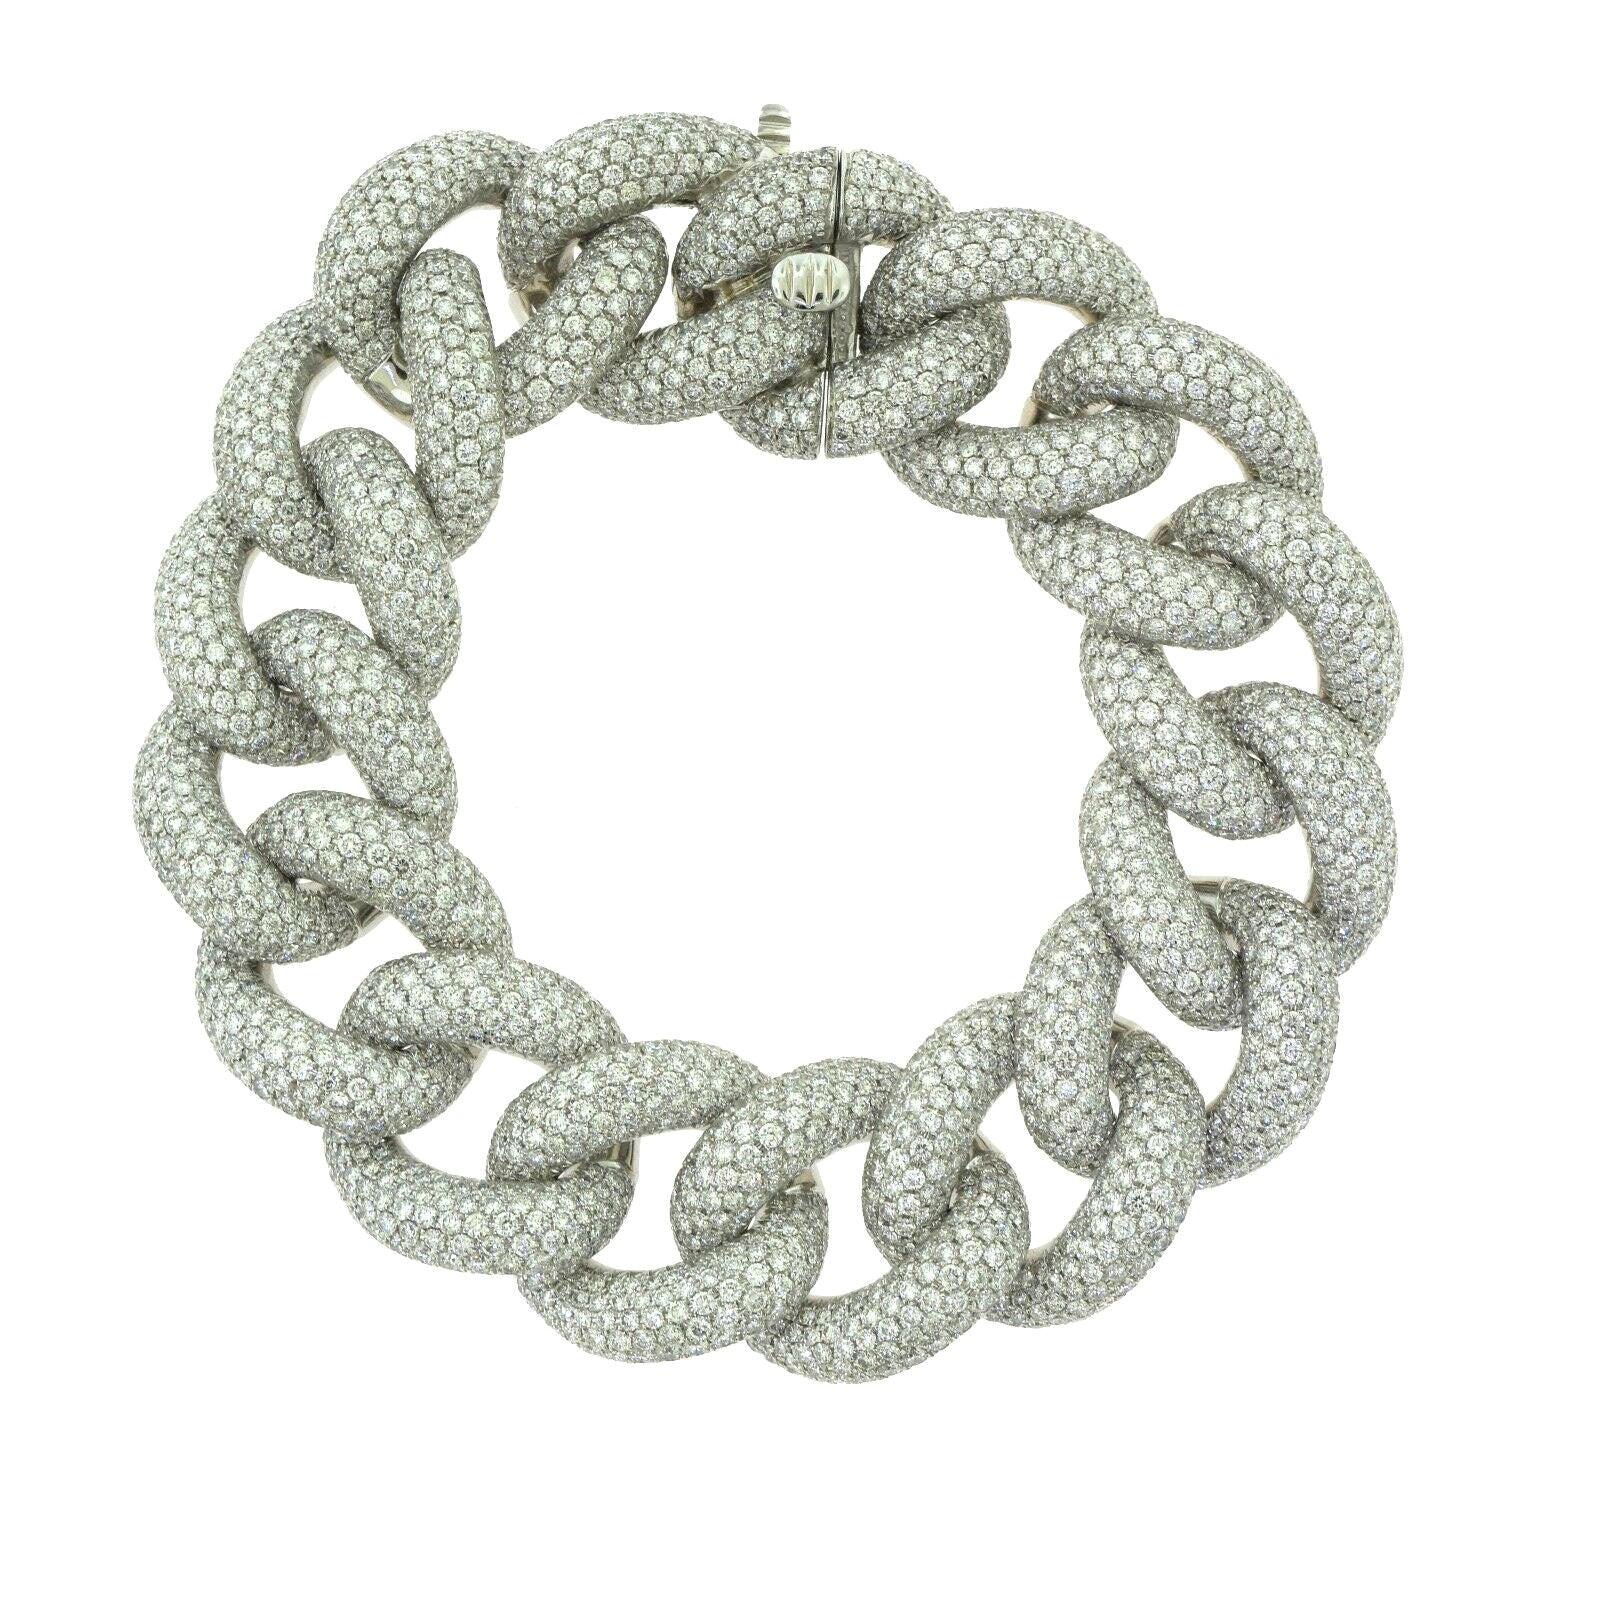 22.21 Carat Diamond-Paved Chain Link Bracelet in White Gold